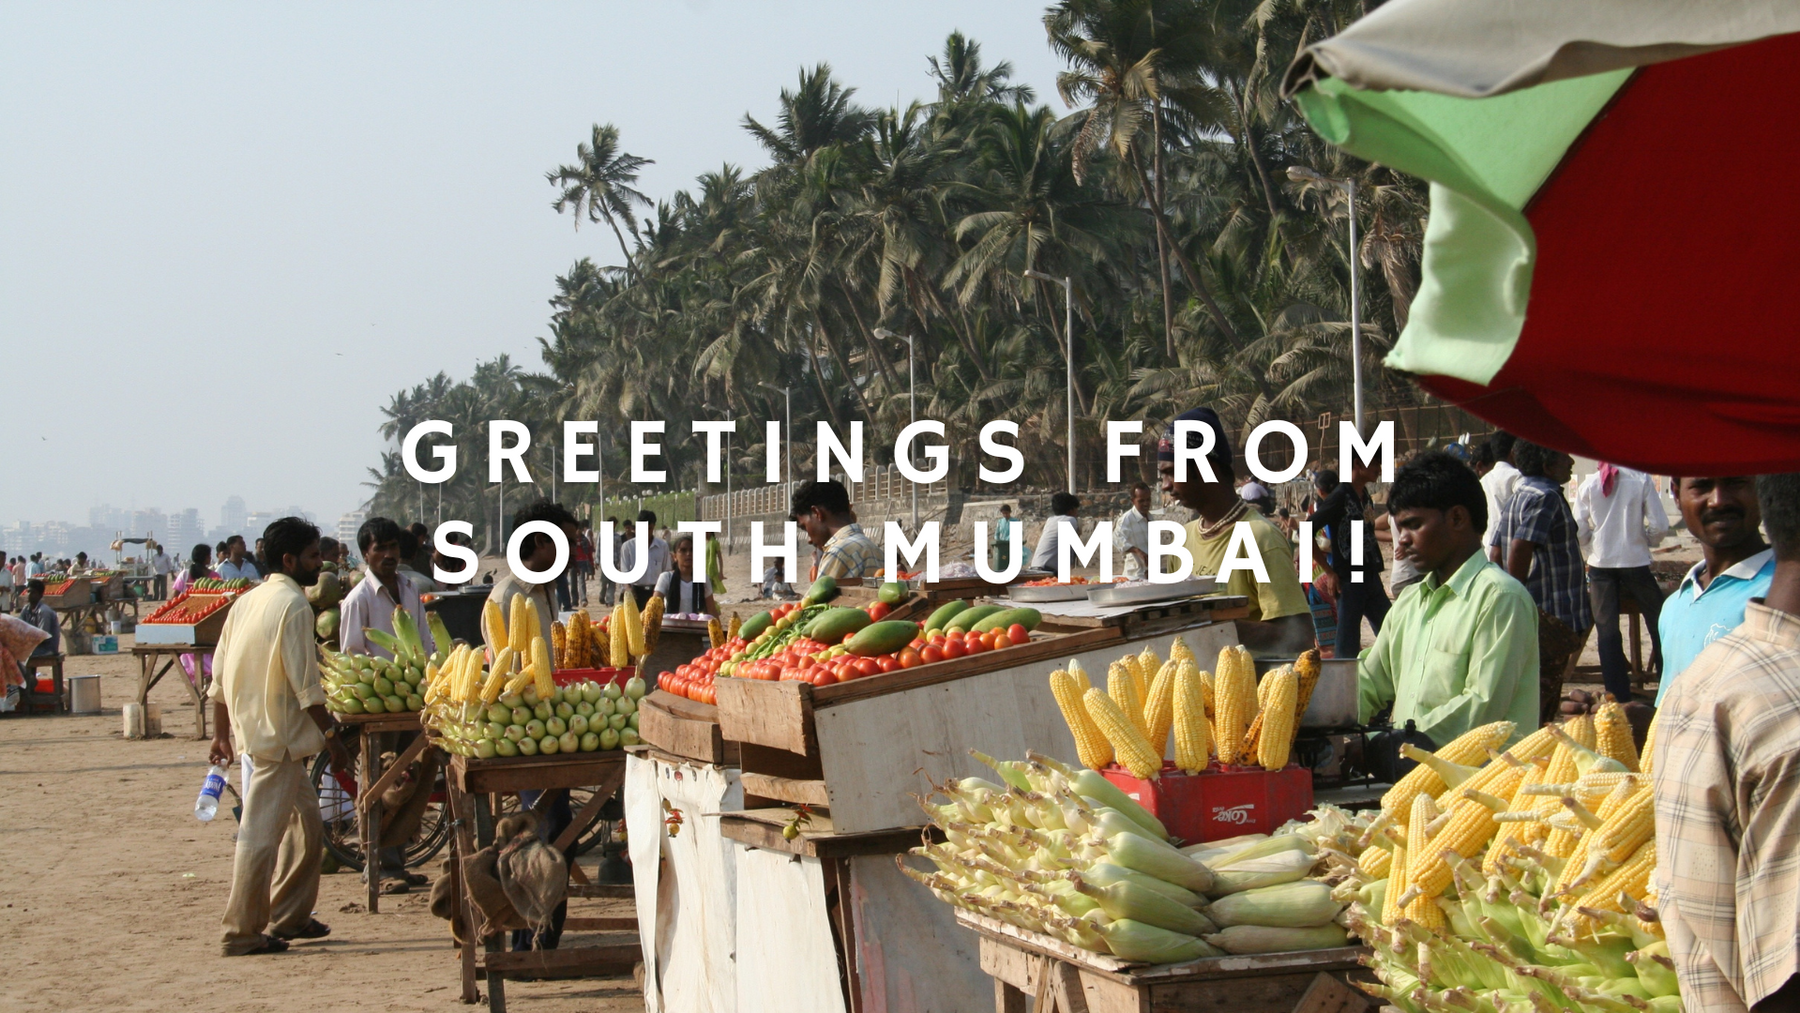 Greetings from South Mumbai!